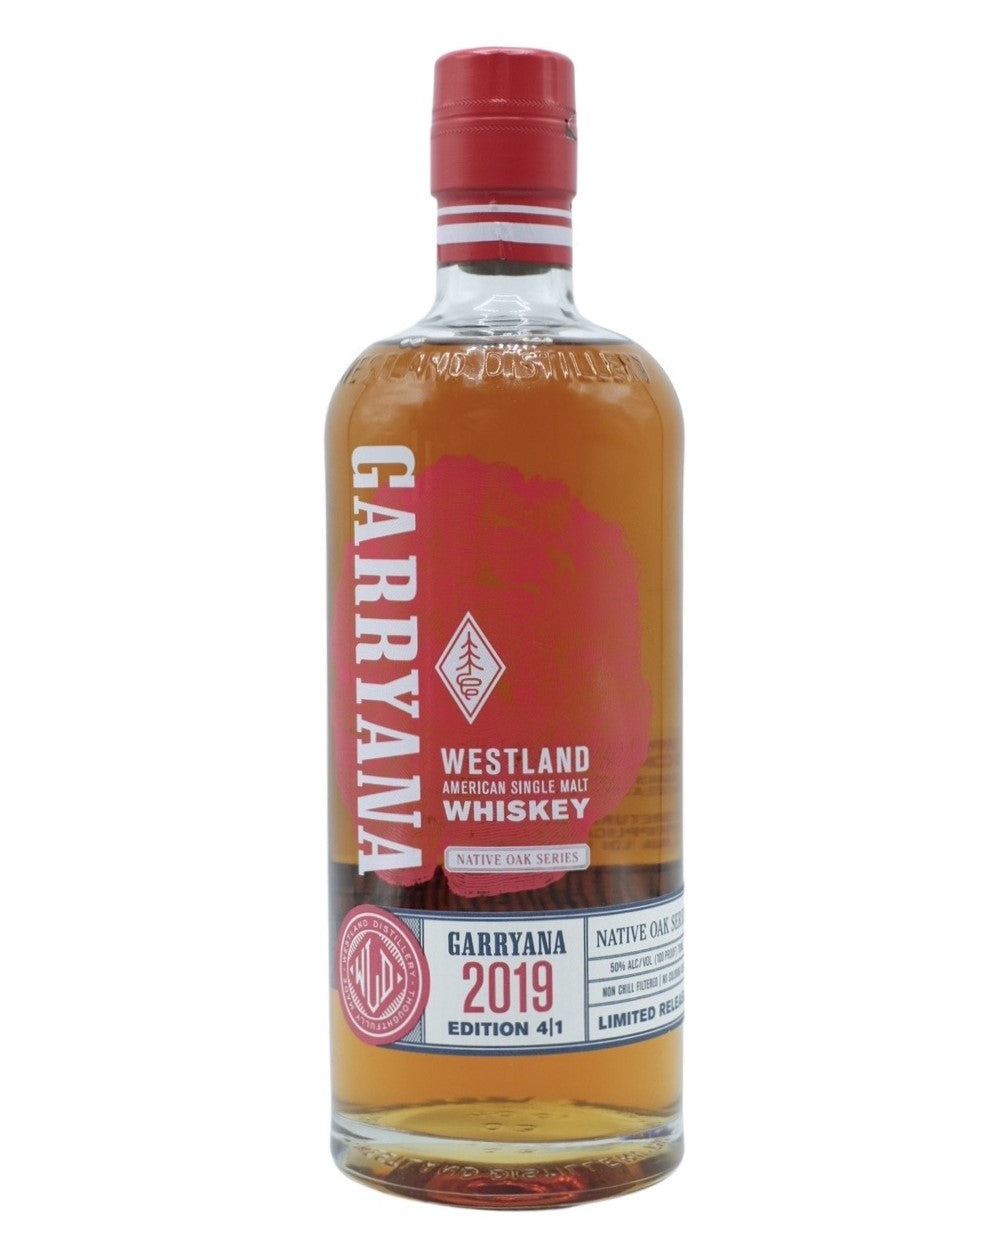 Westland Garryana Single Malt Whisky